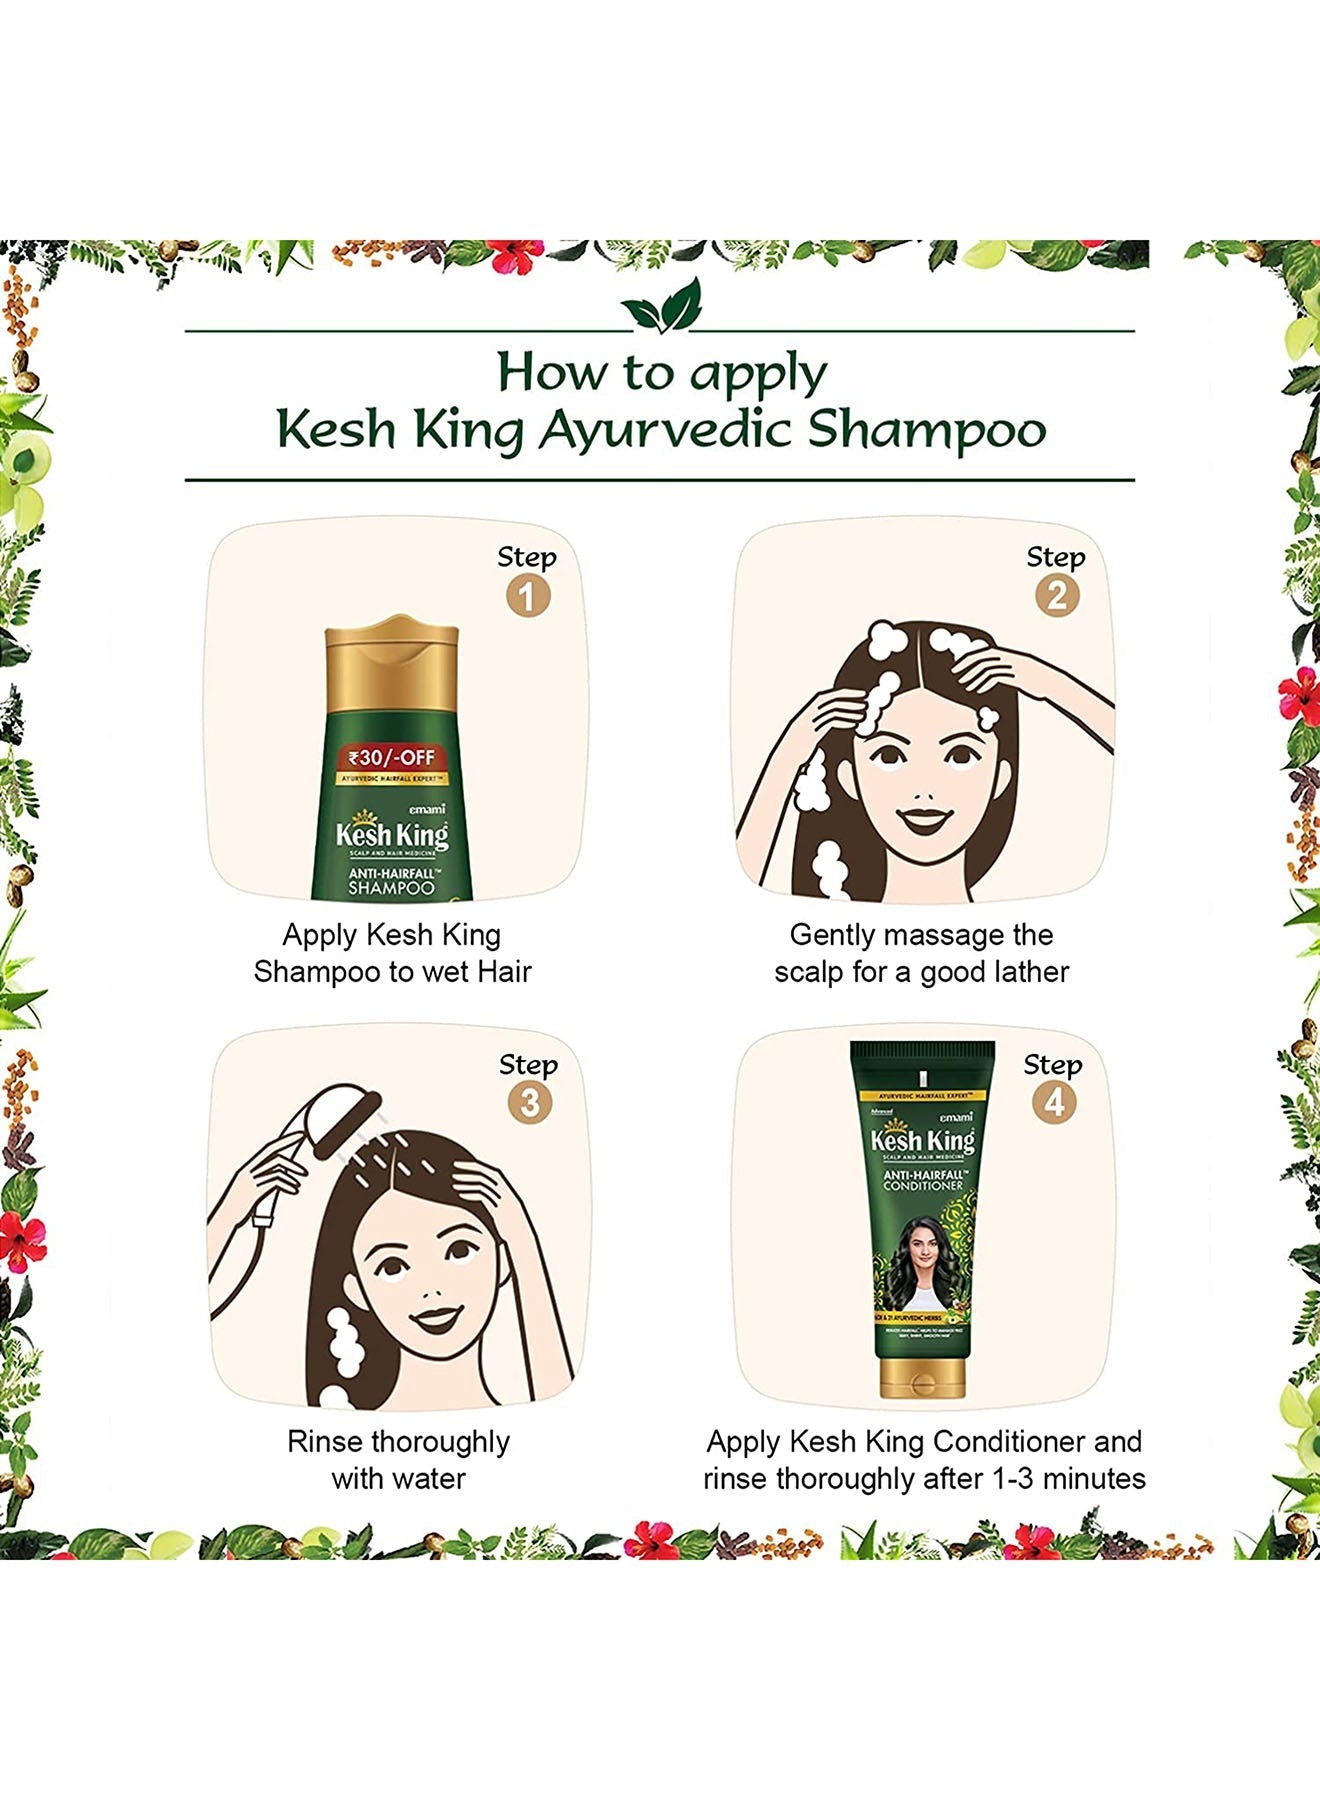 Emami Kesh King Scalp And Hair Medicine Anti Hairfall Shampoo 200ml